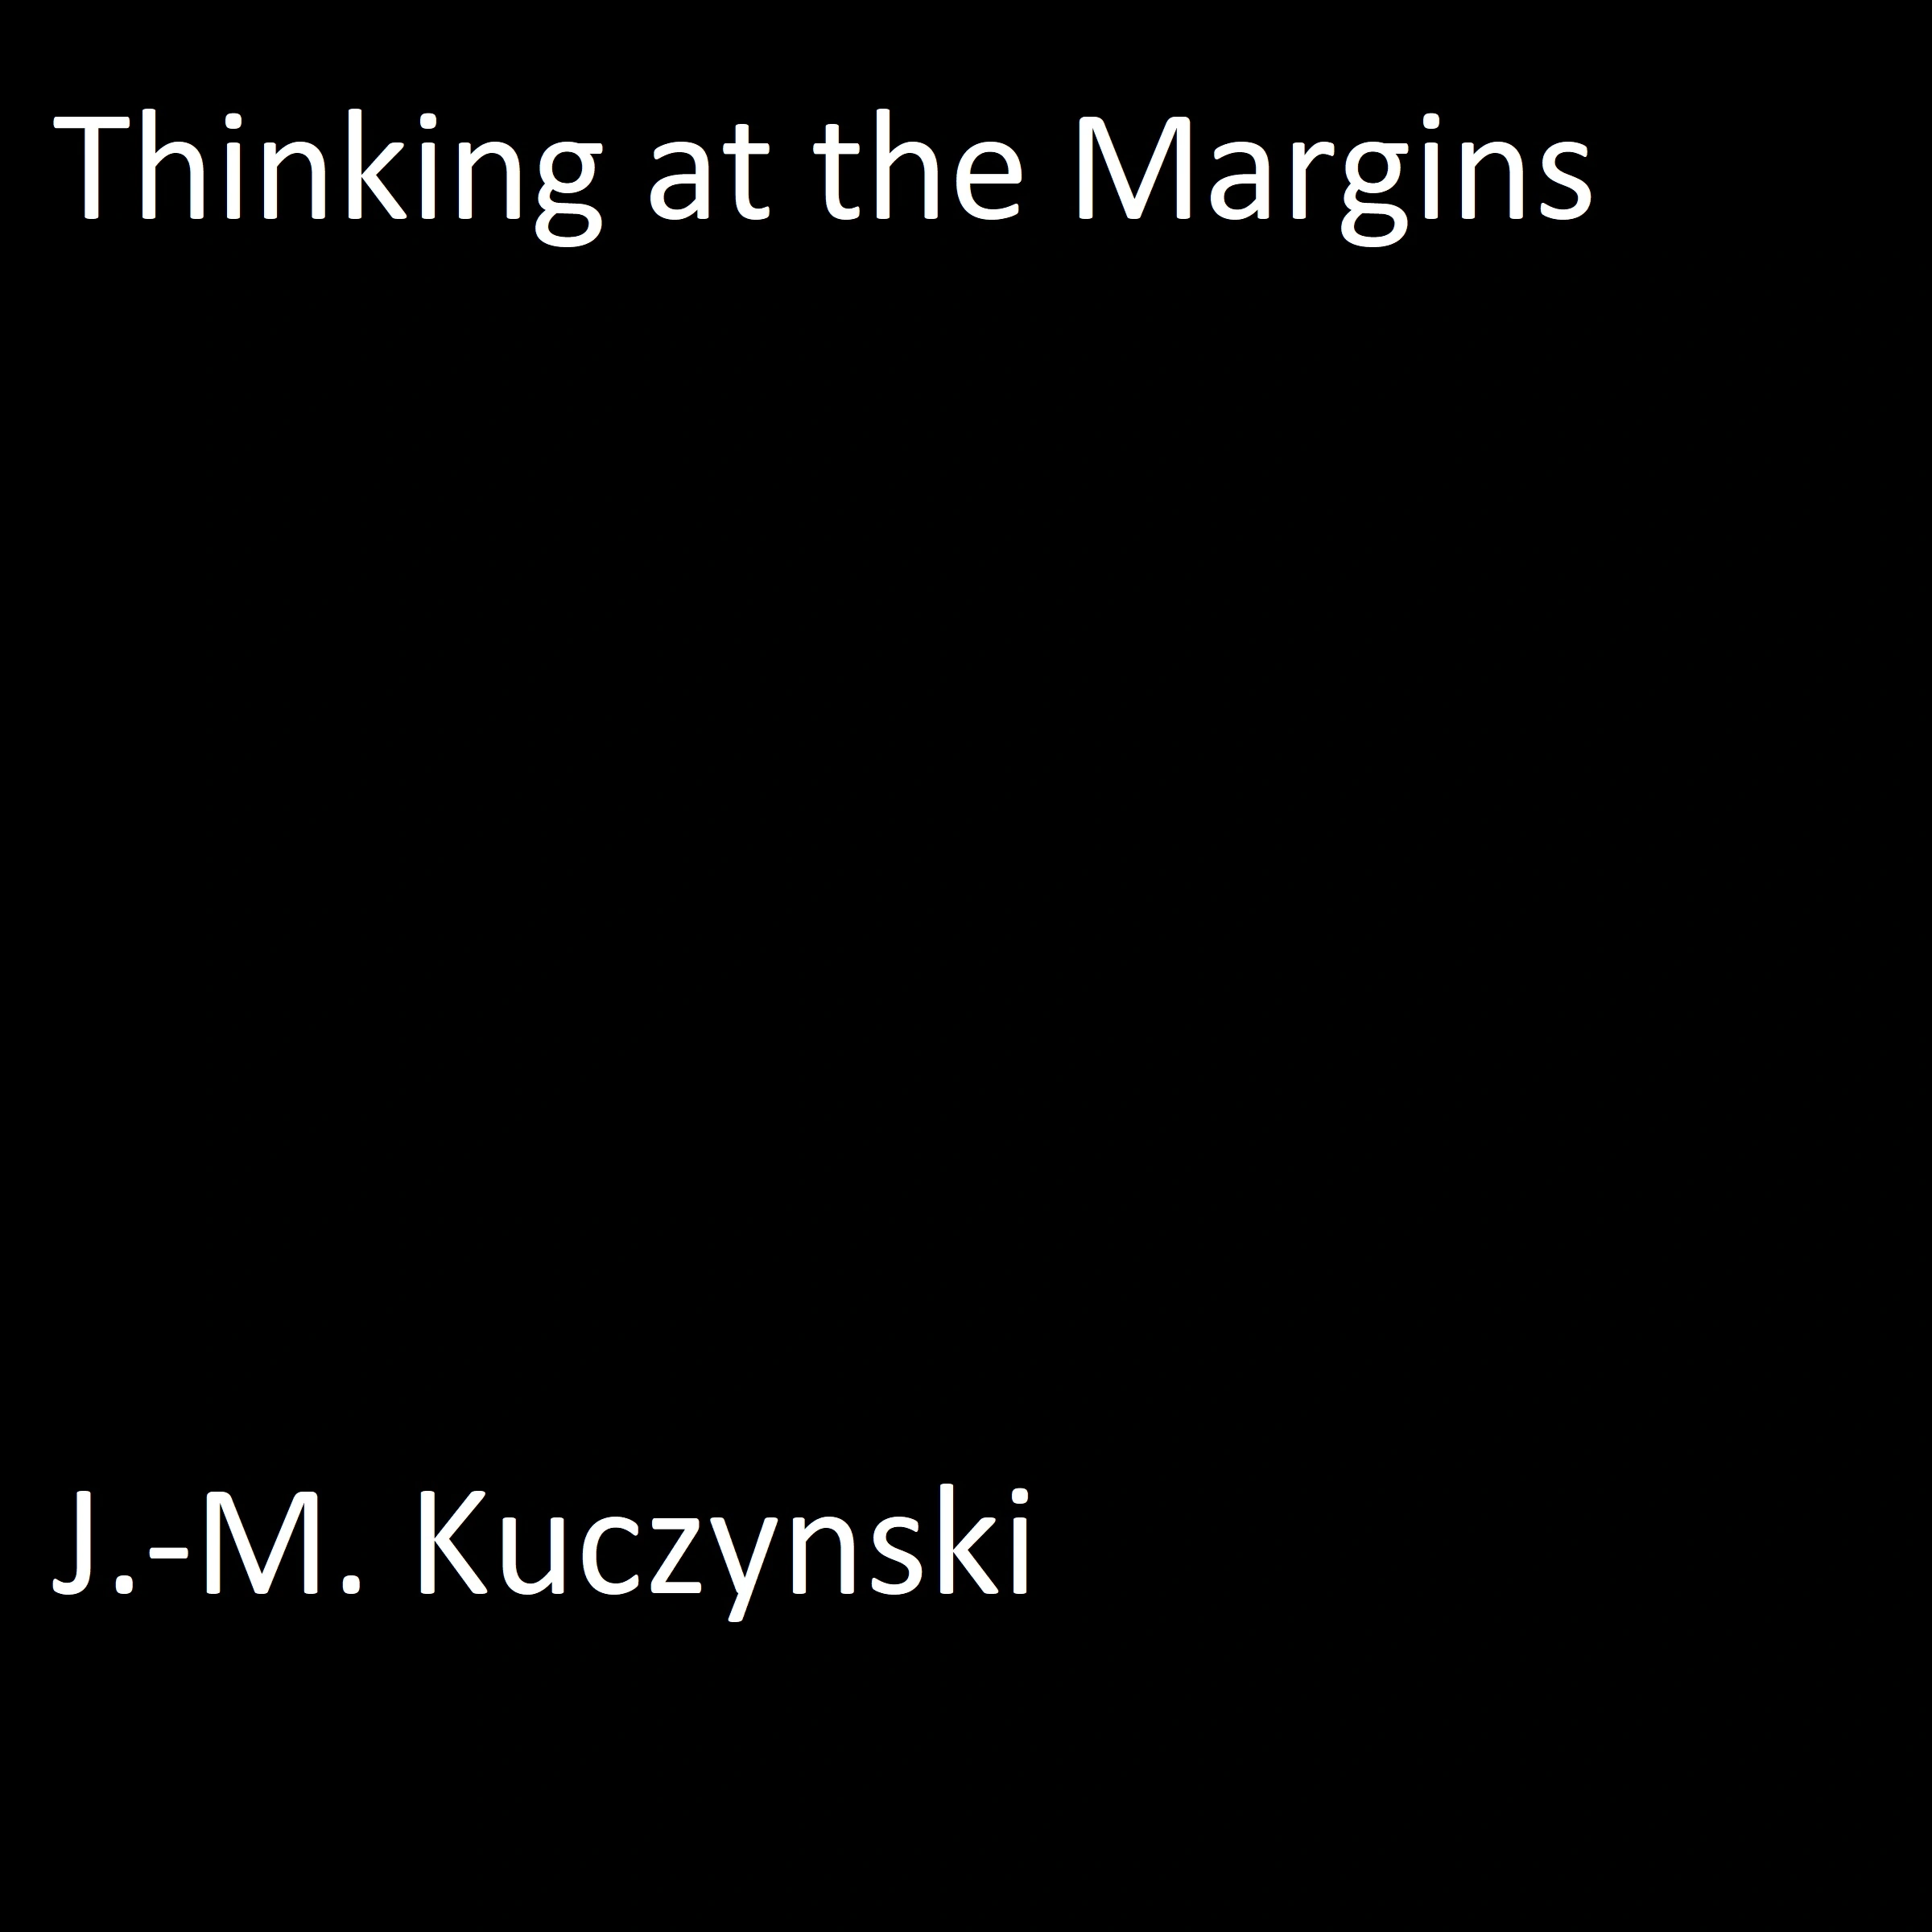 Thinking at the Margins Audiobook by J.-M. Kuczynski